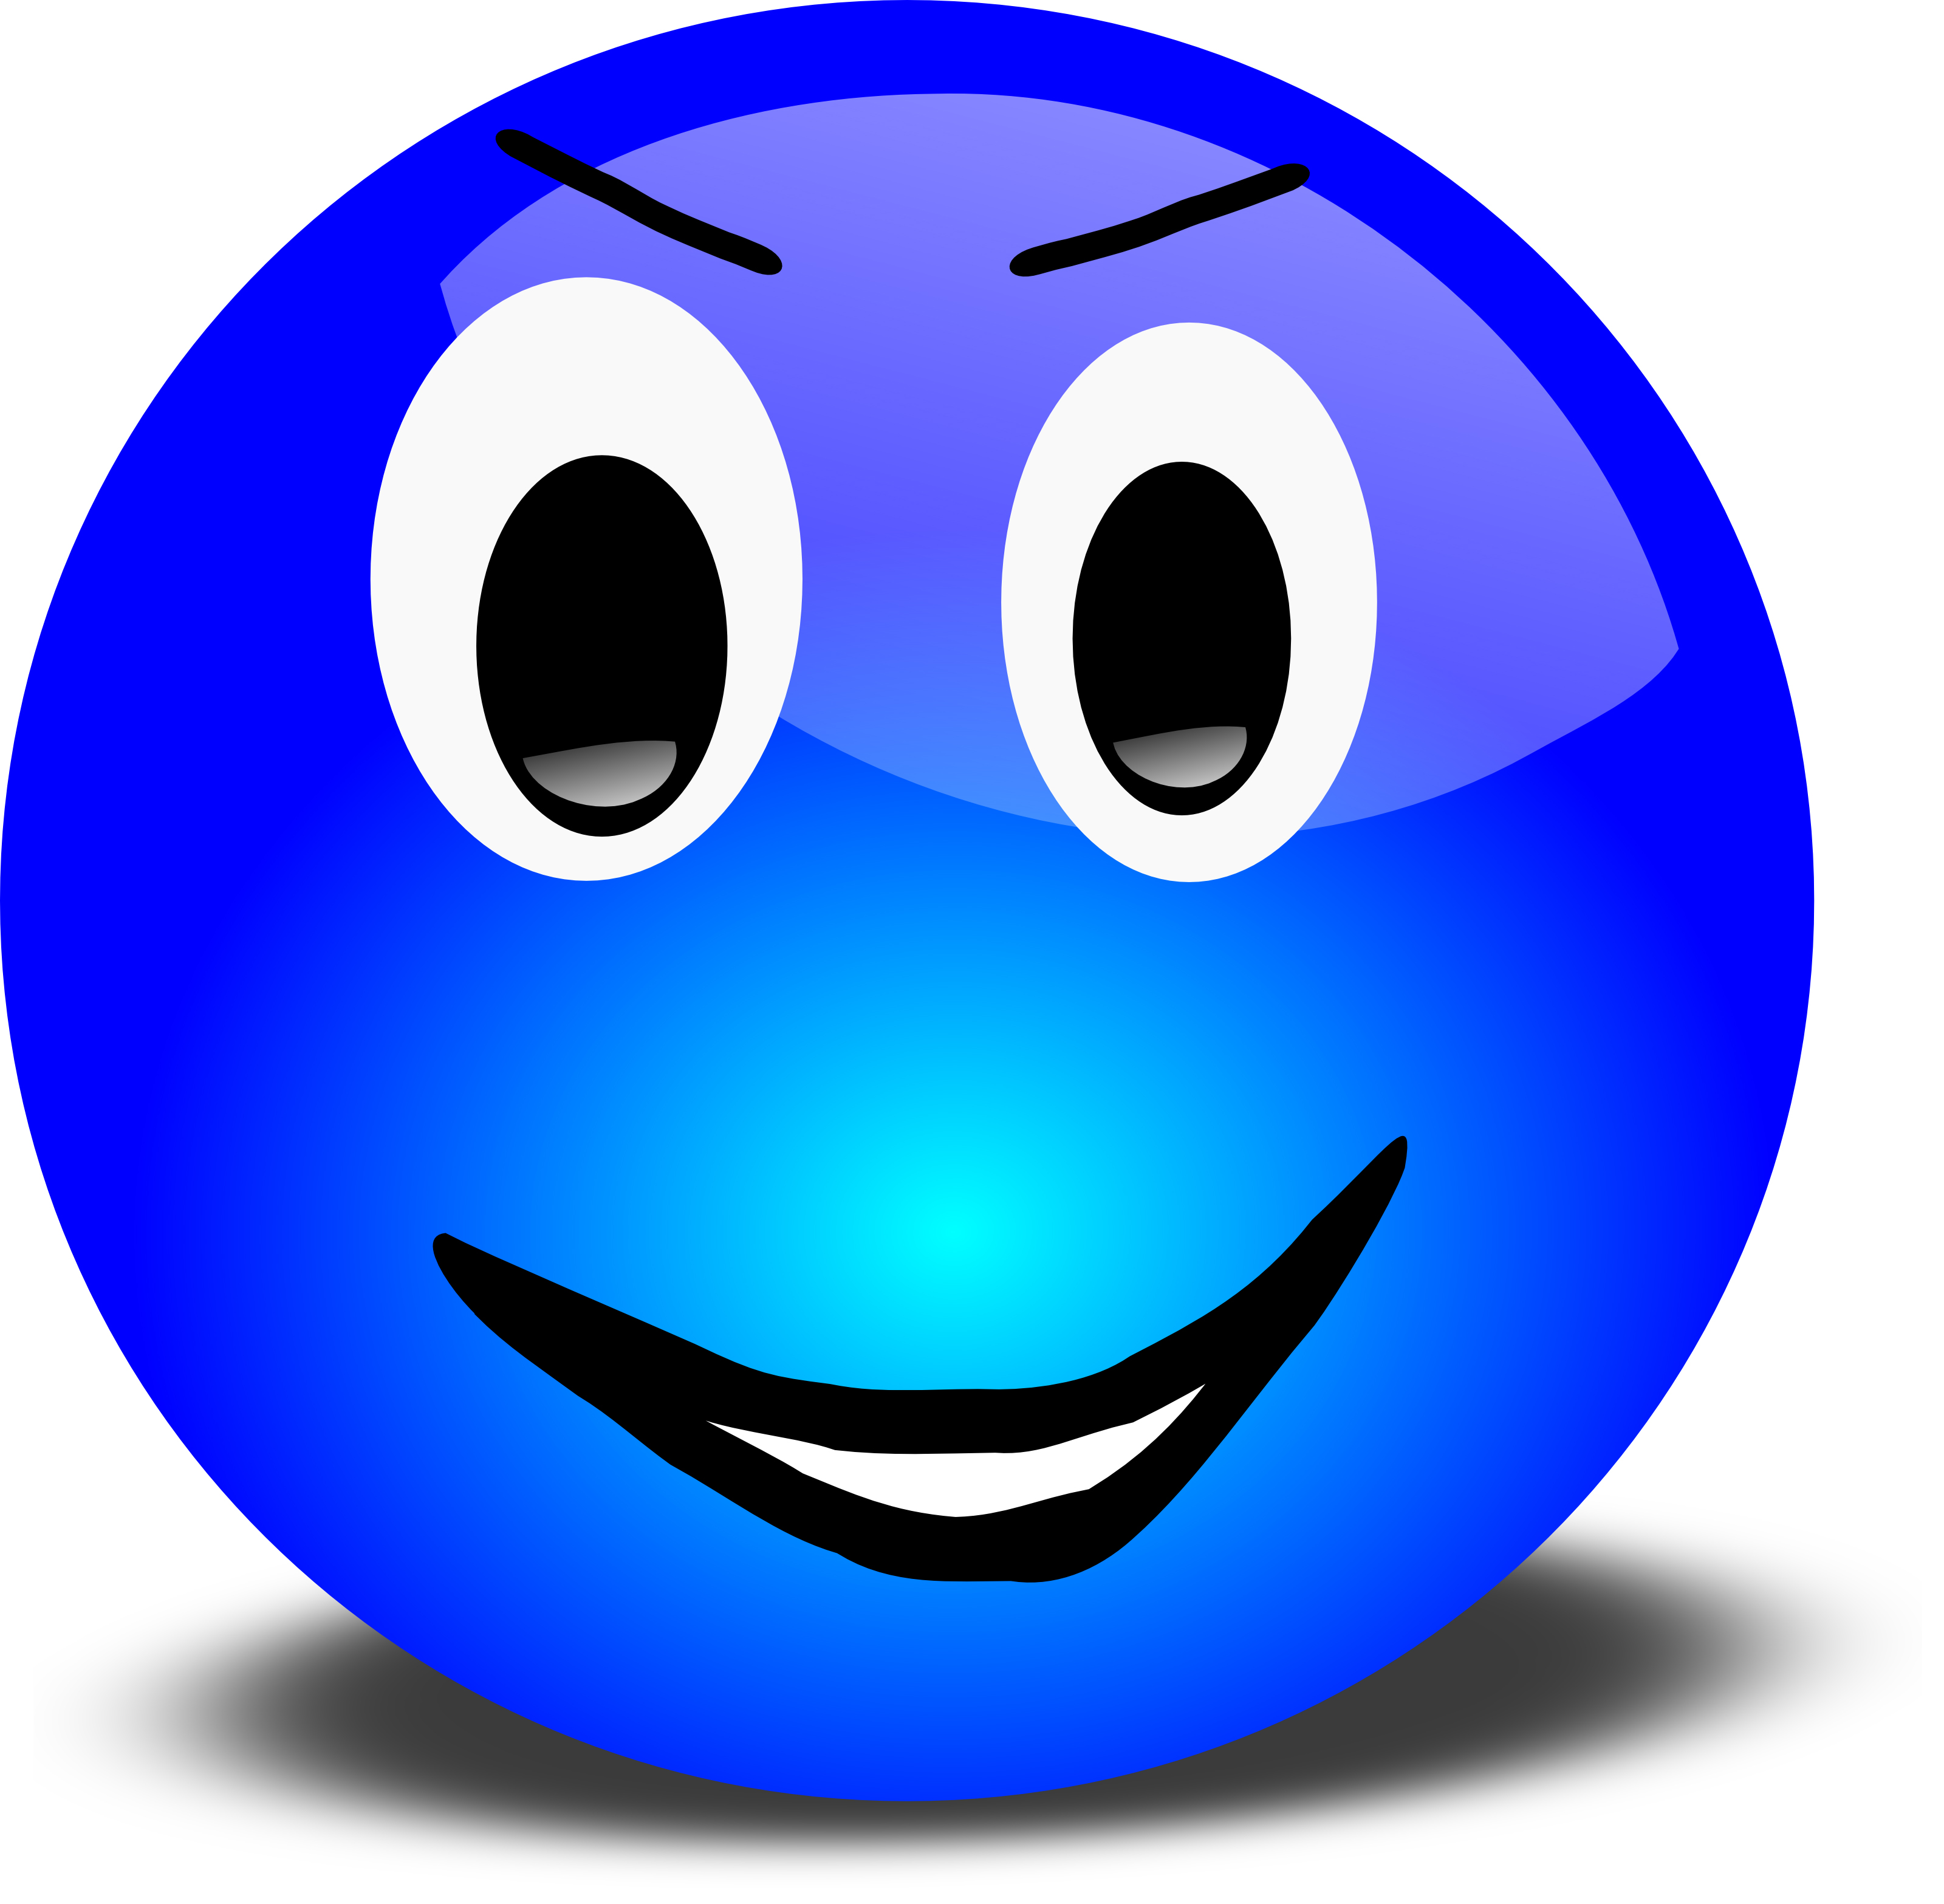 83-Free-3d-Grinning-Blue-Smiley-Face-Clipart-Illustration.jpg